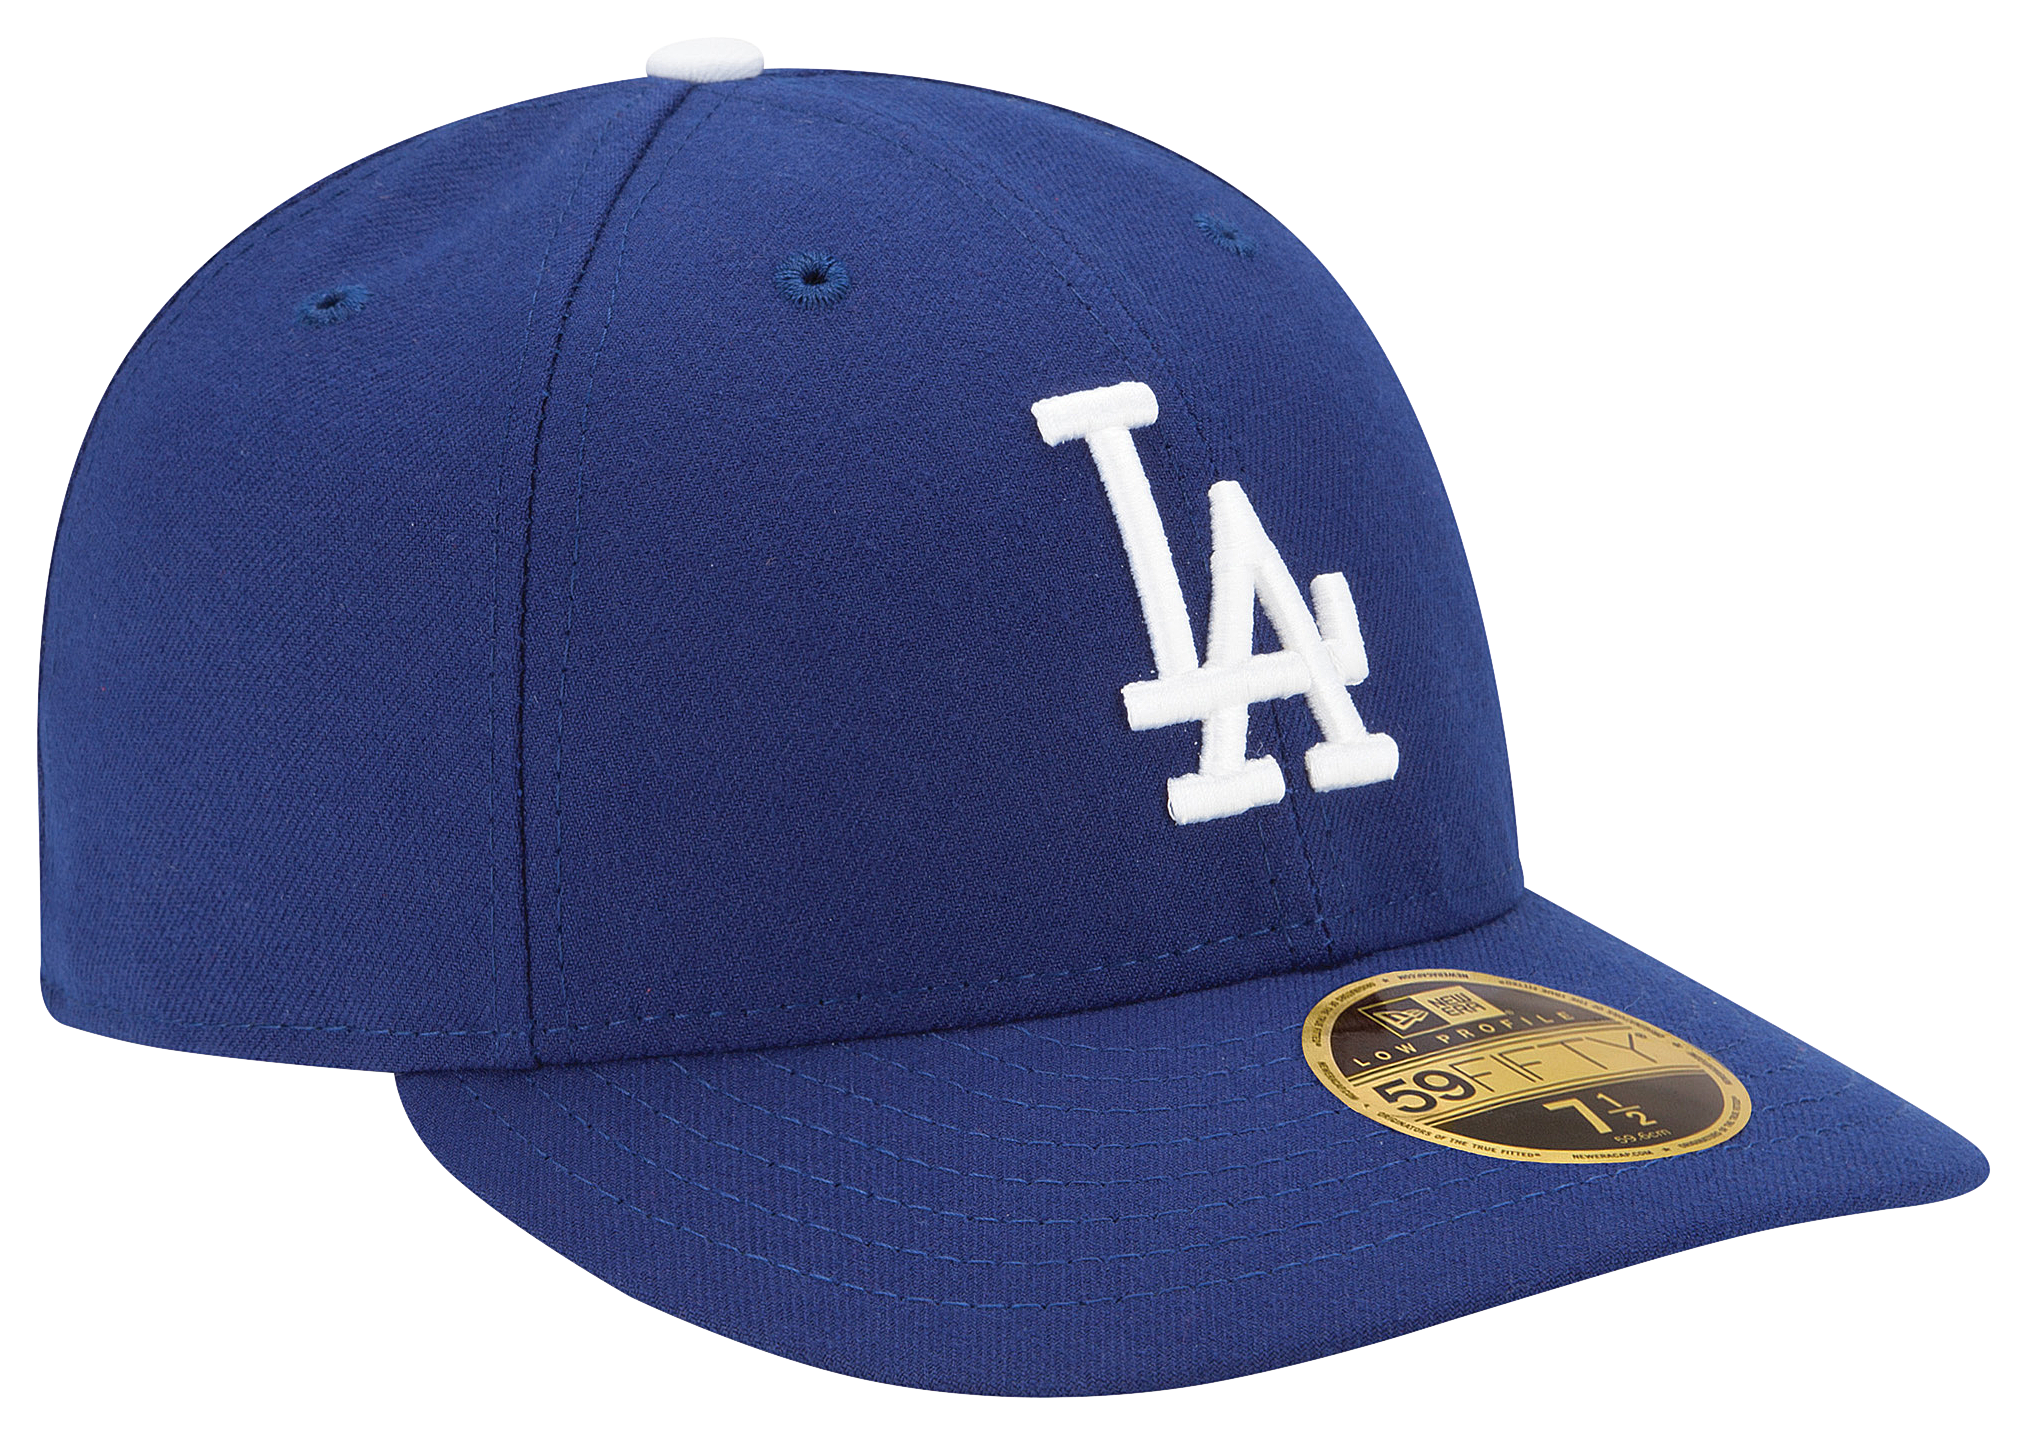 New Era Dodgers 59Fifty Authentic LP Cap